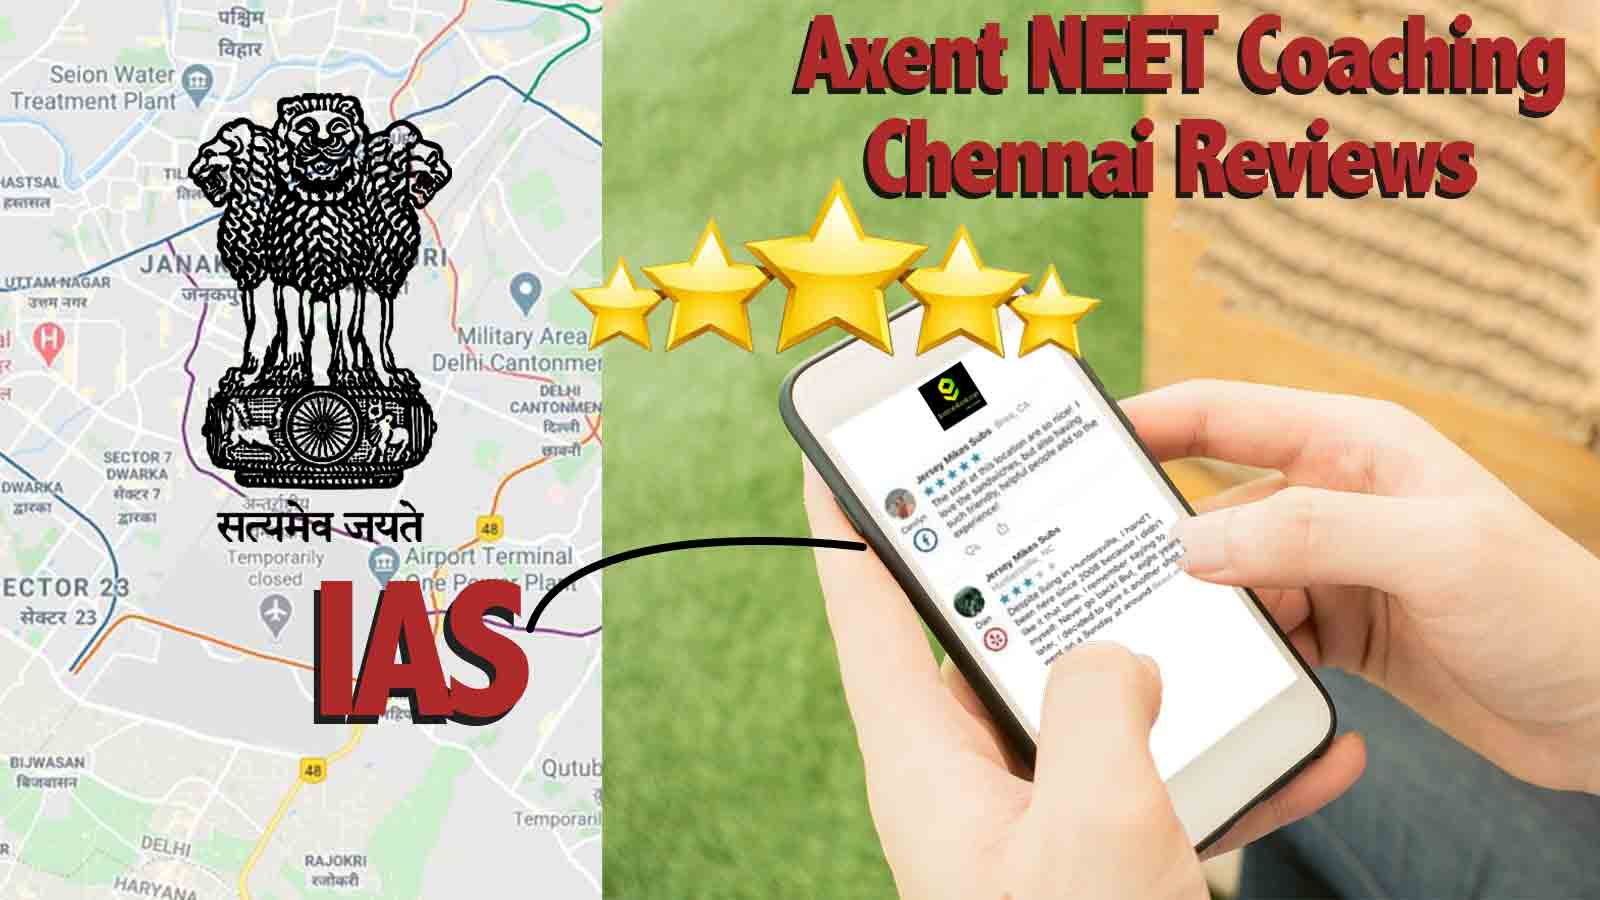 Axent NEET Coaching Chennai Reviews